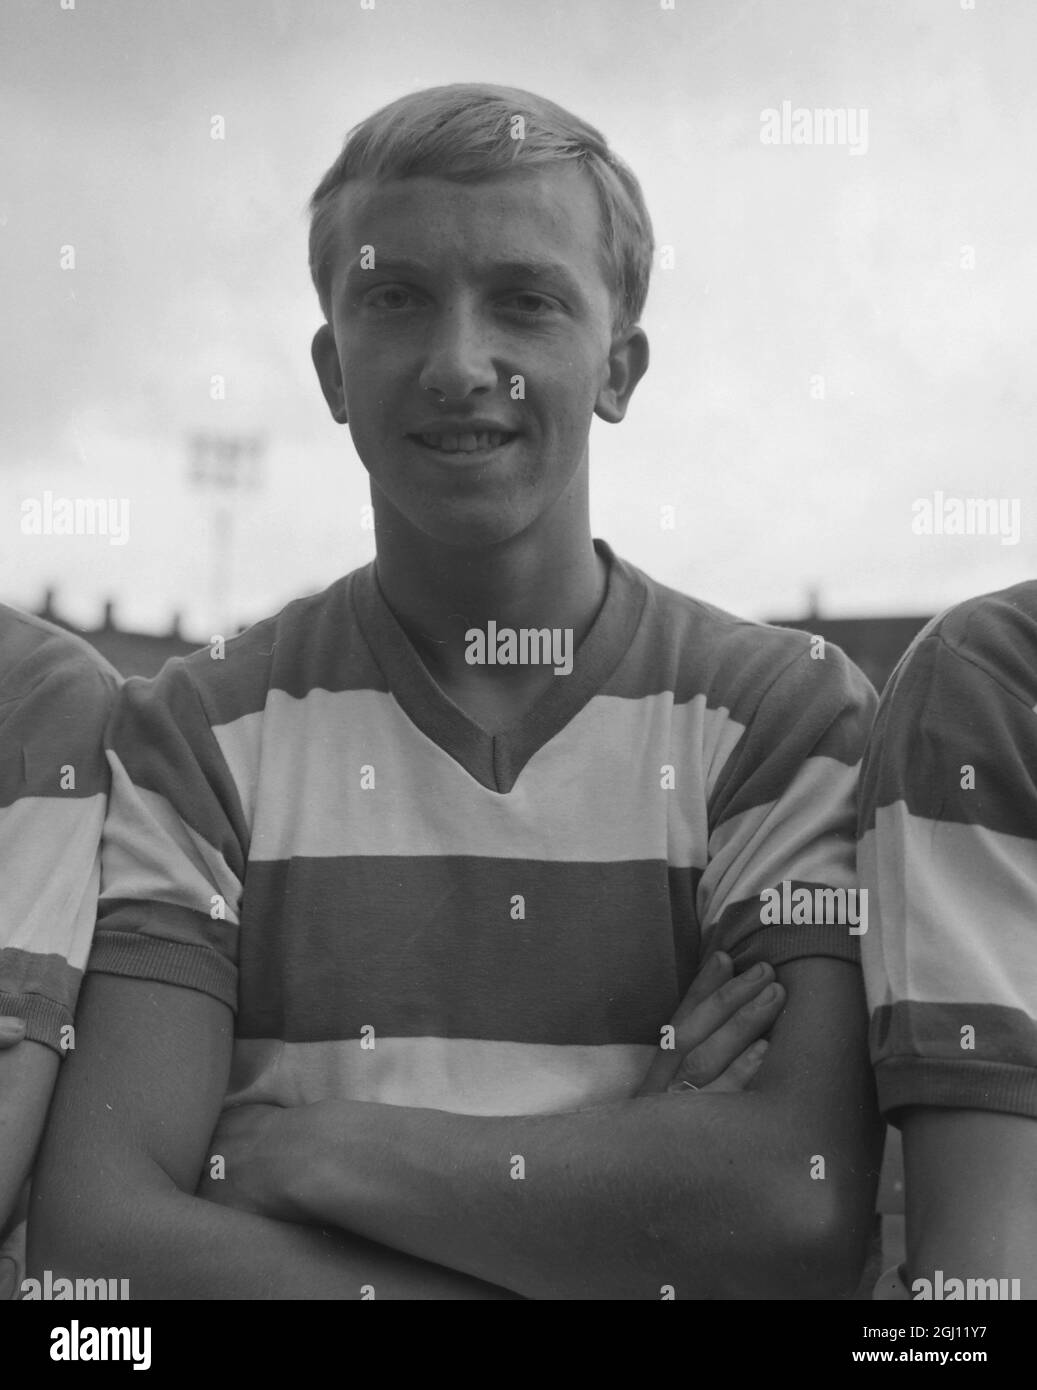 JOHN COLLINS - FOOTBALLER OF QUEEN'S PARK RANGERS FOOTBALL CLUB 10 AUGUST 1961 Stock Photo